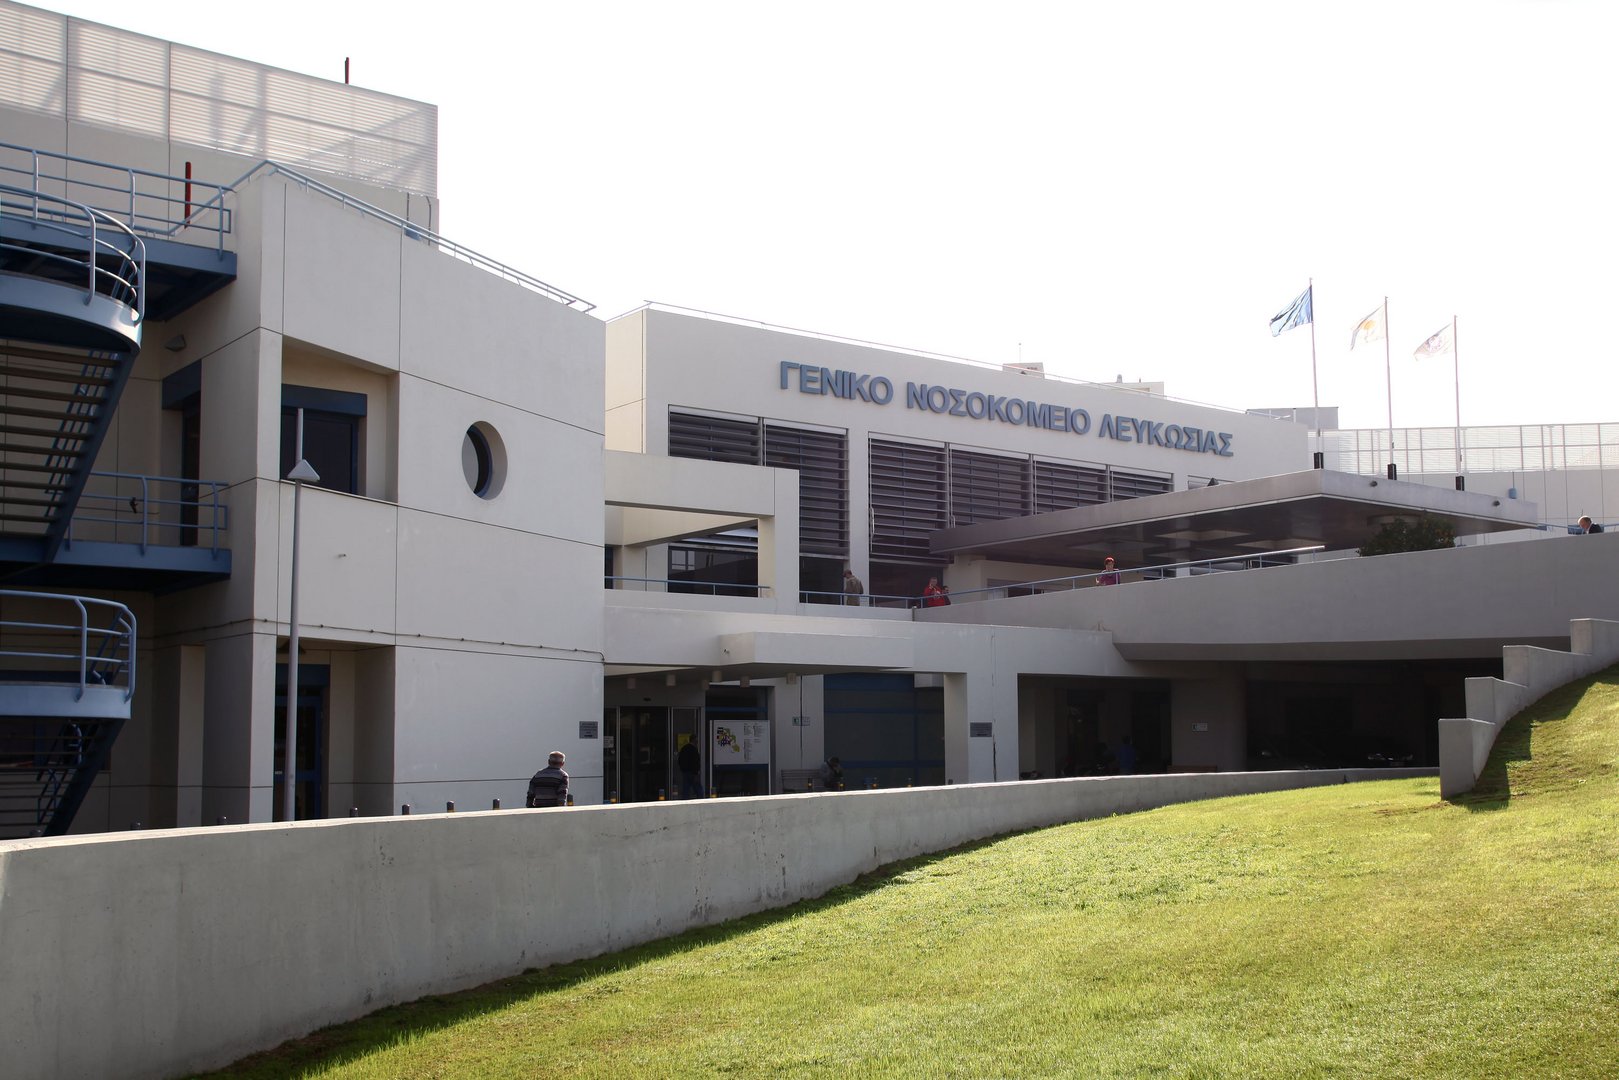 image Photovoltaic park for Nicosia general hospital